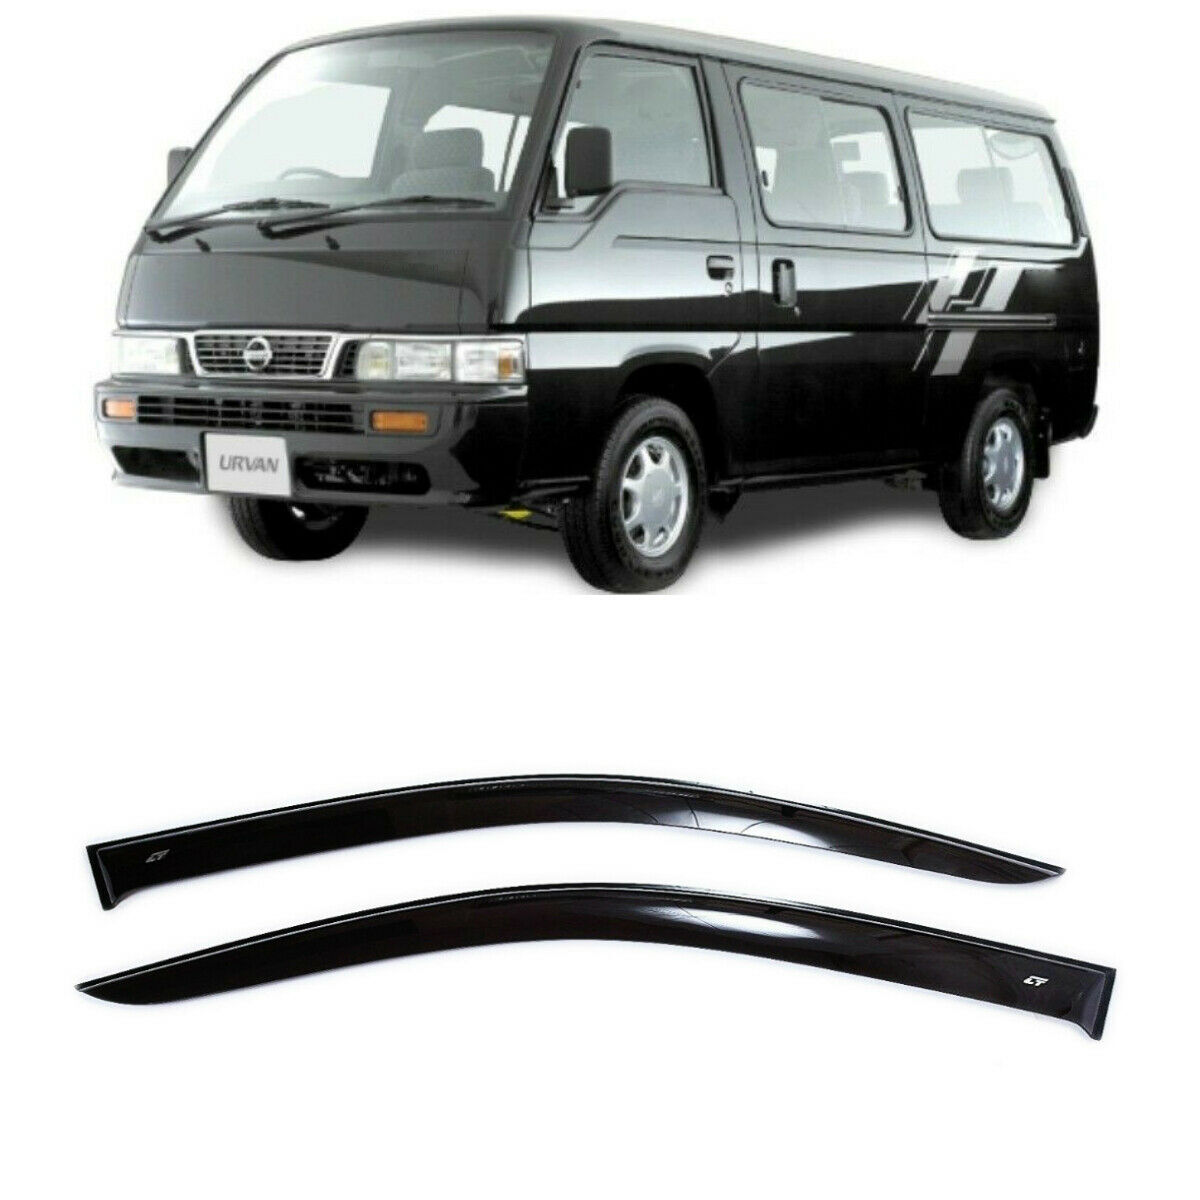 2001 1986. Nissan Urvan e24. Nissan Urvan (e24) 1986-2001. Дефлекторы окон Москвич Cobra-Tuning. Nissan Urvan 1985.